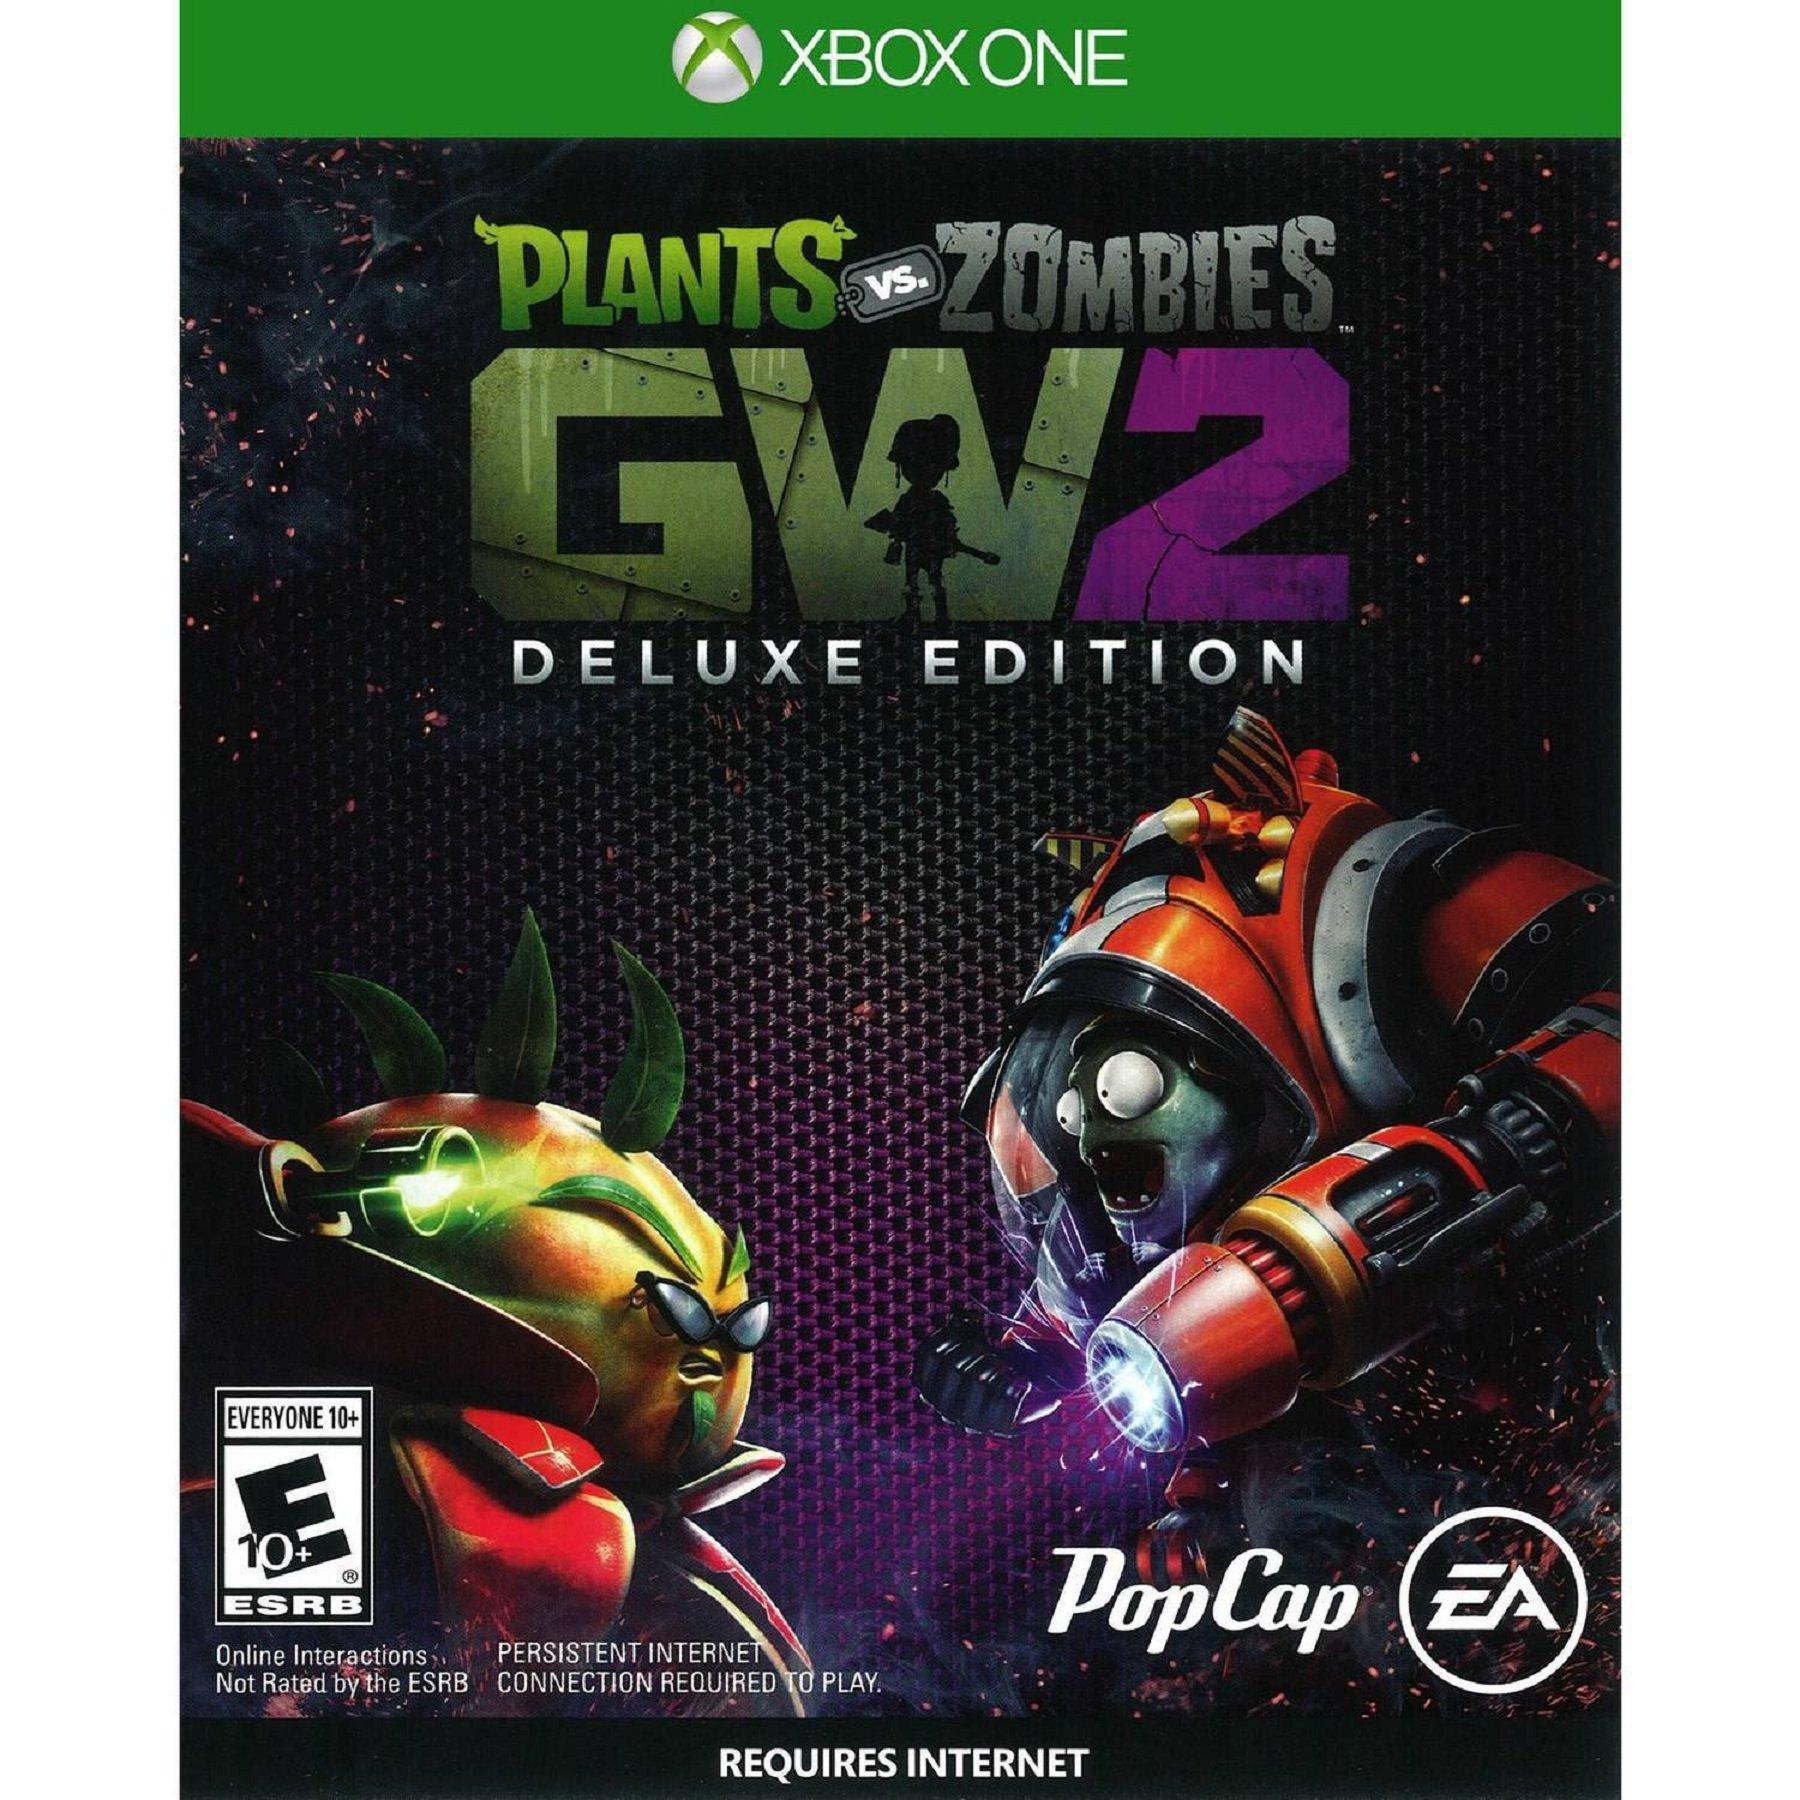 Plants vs. Zombies Garden Warfare 2 Deluxe Edition Upgrade - Xbox One